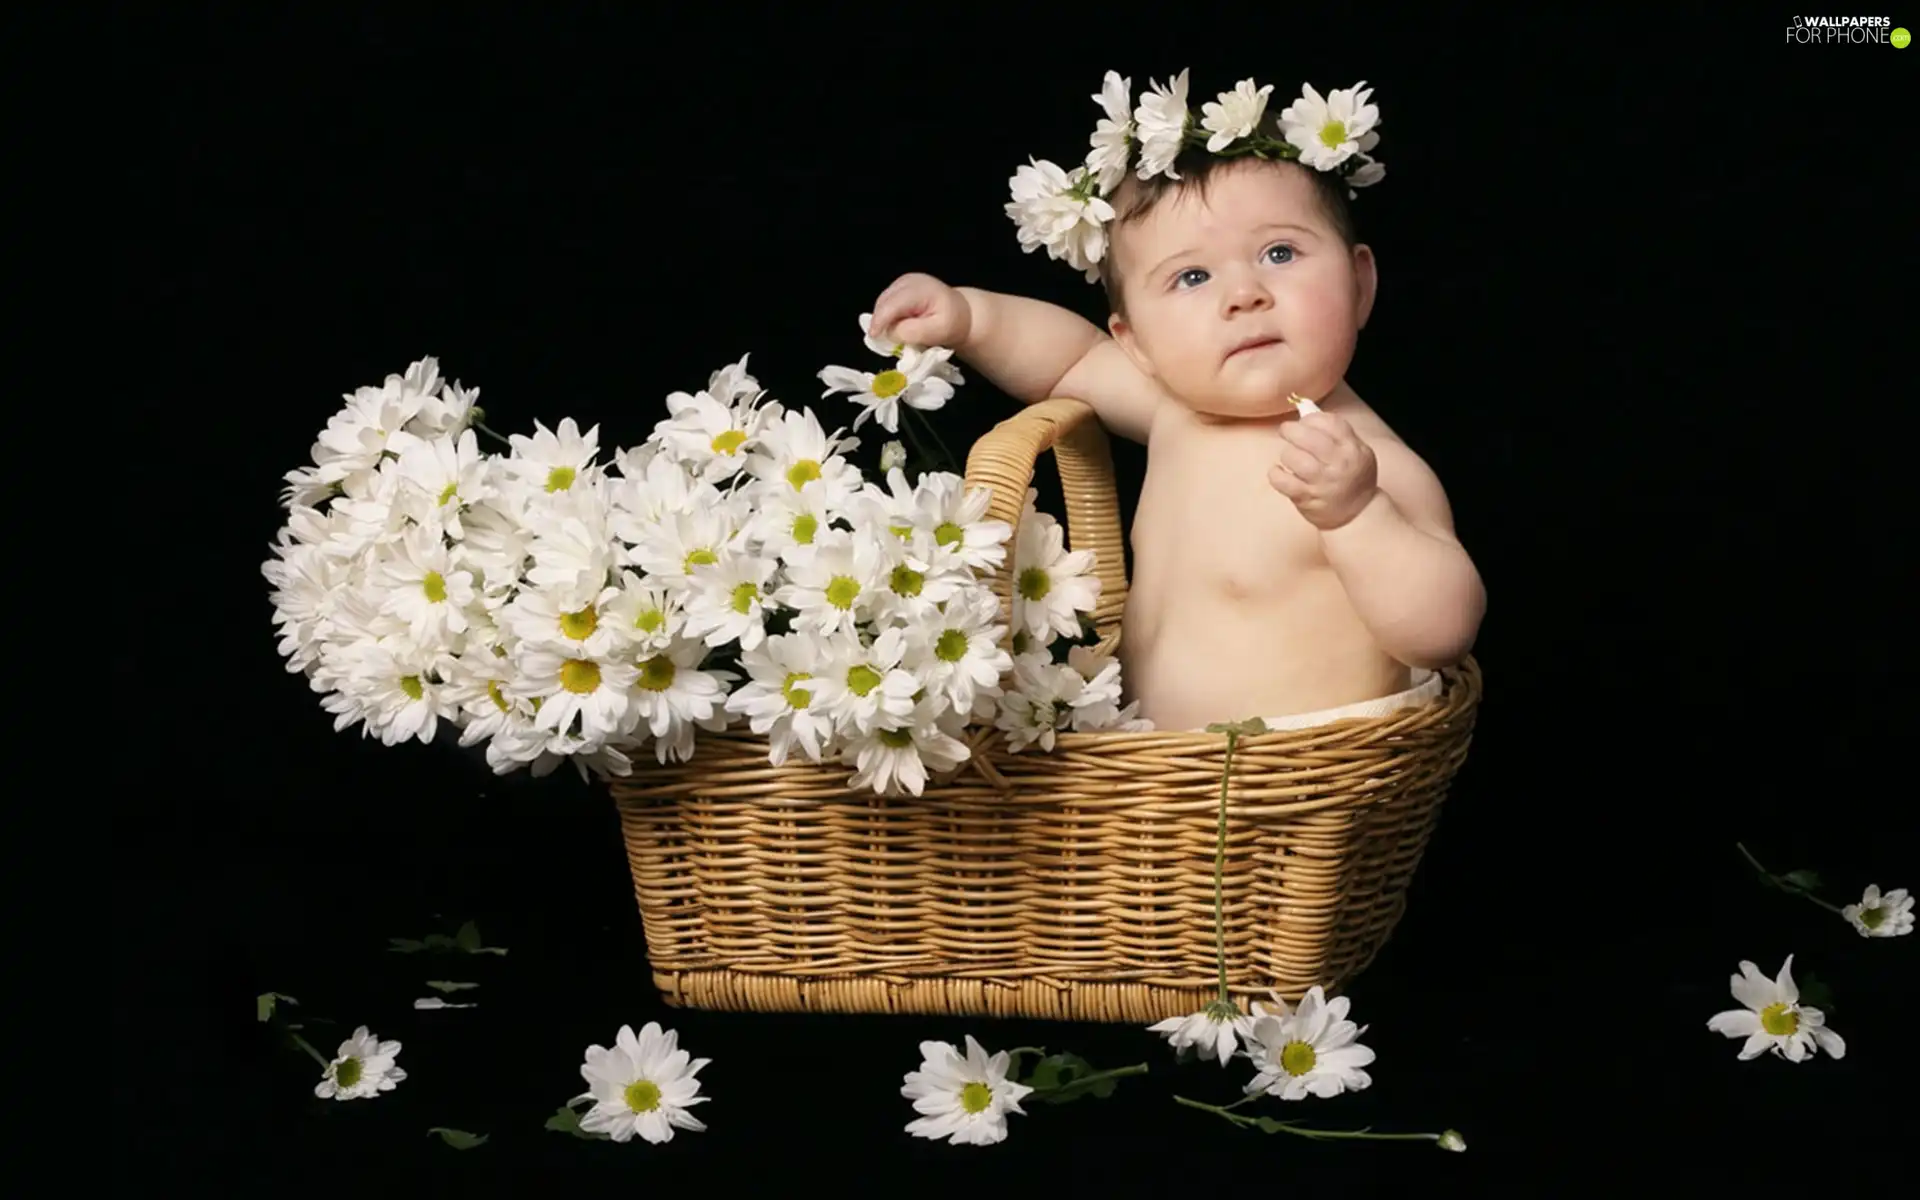 Flowers, wreath, basket, White, Kid